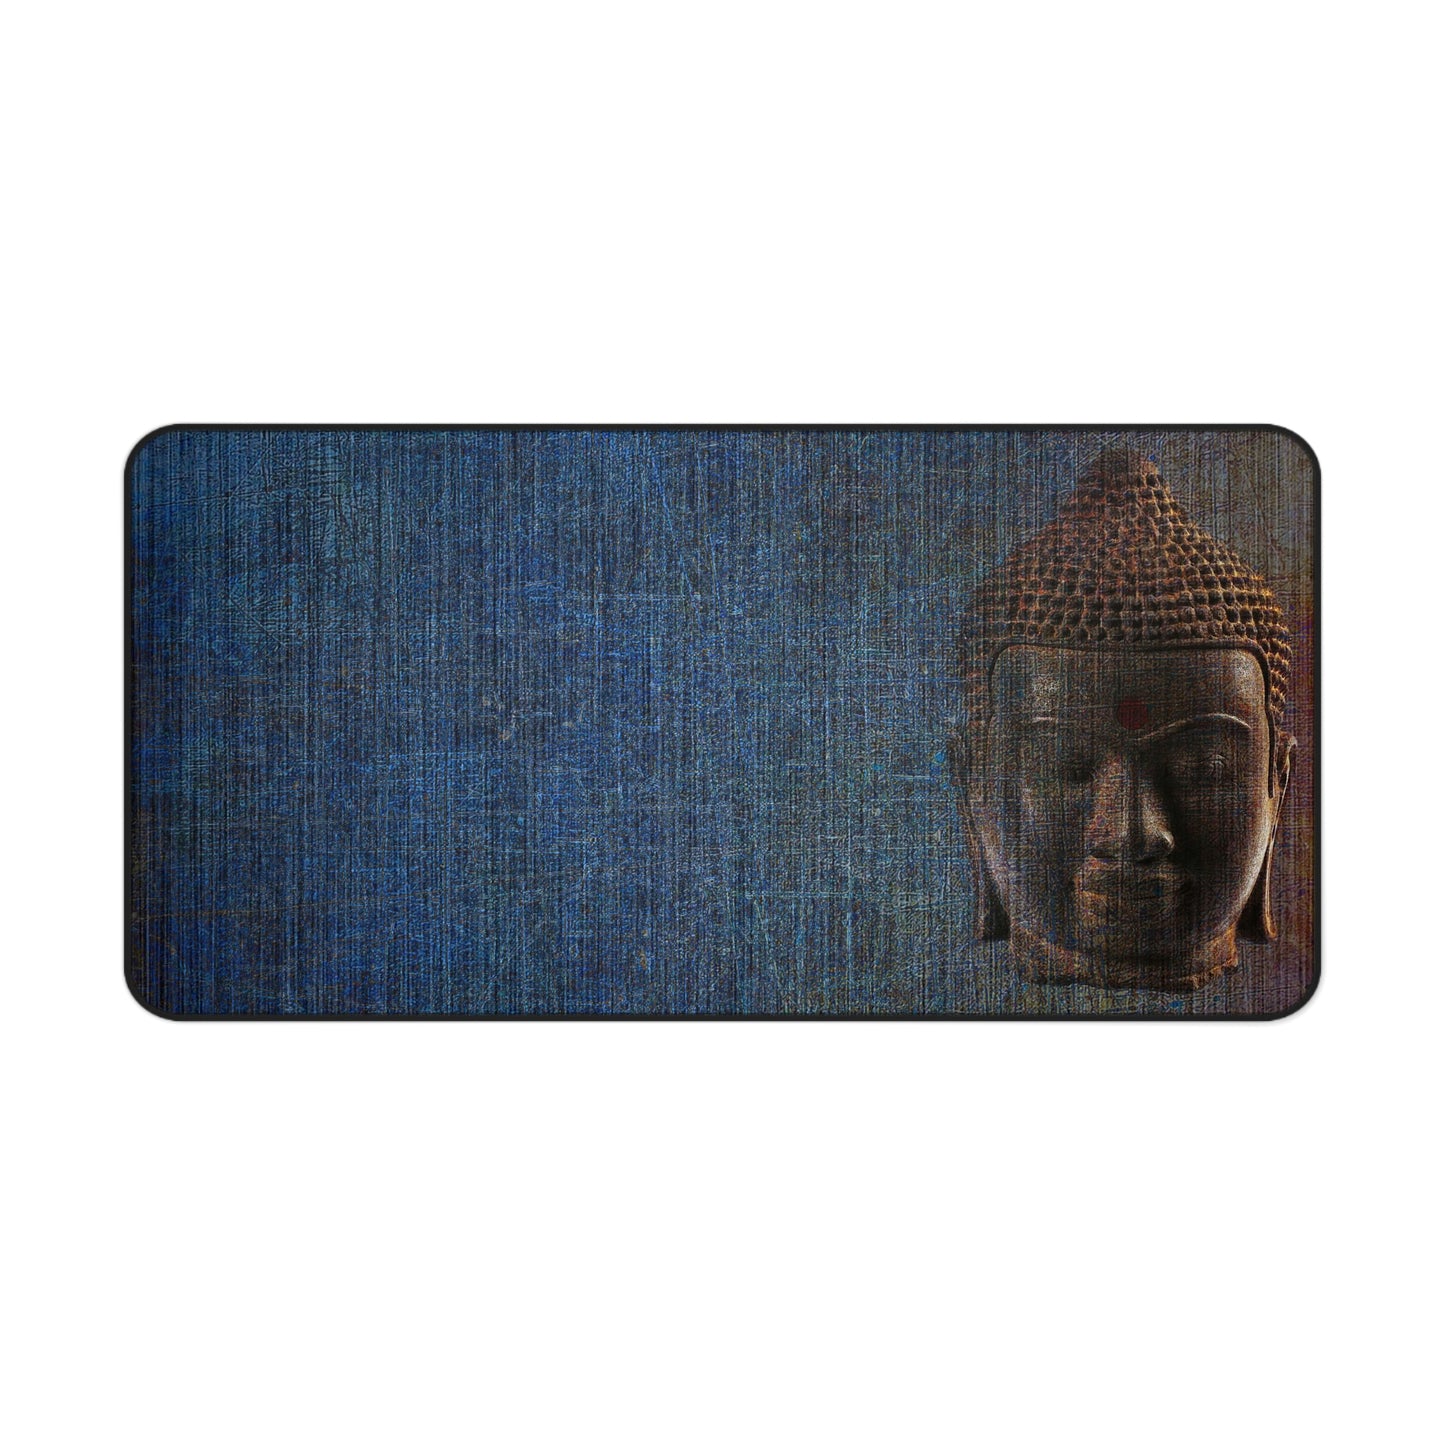 Buddha Themed Desk Accessories - Blue Buddha Head Neoprene Desk mat 15.5 by 31